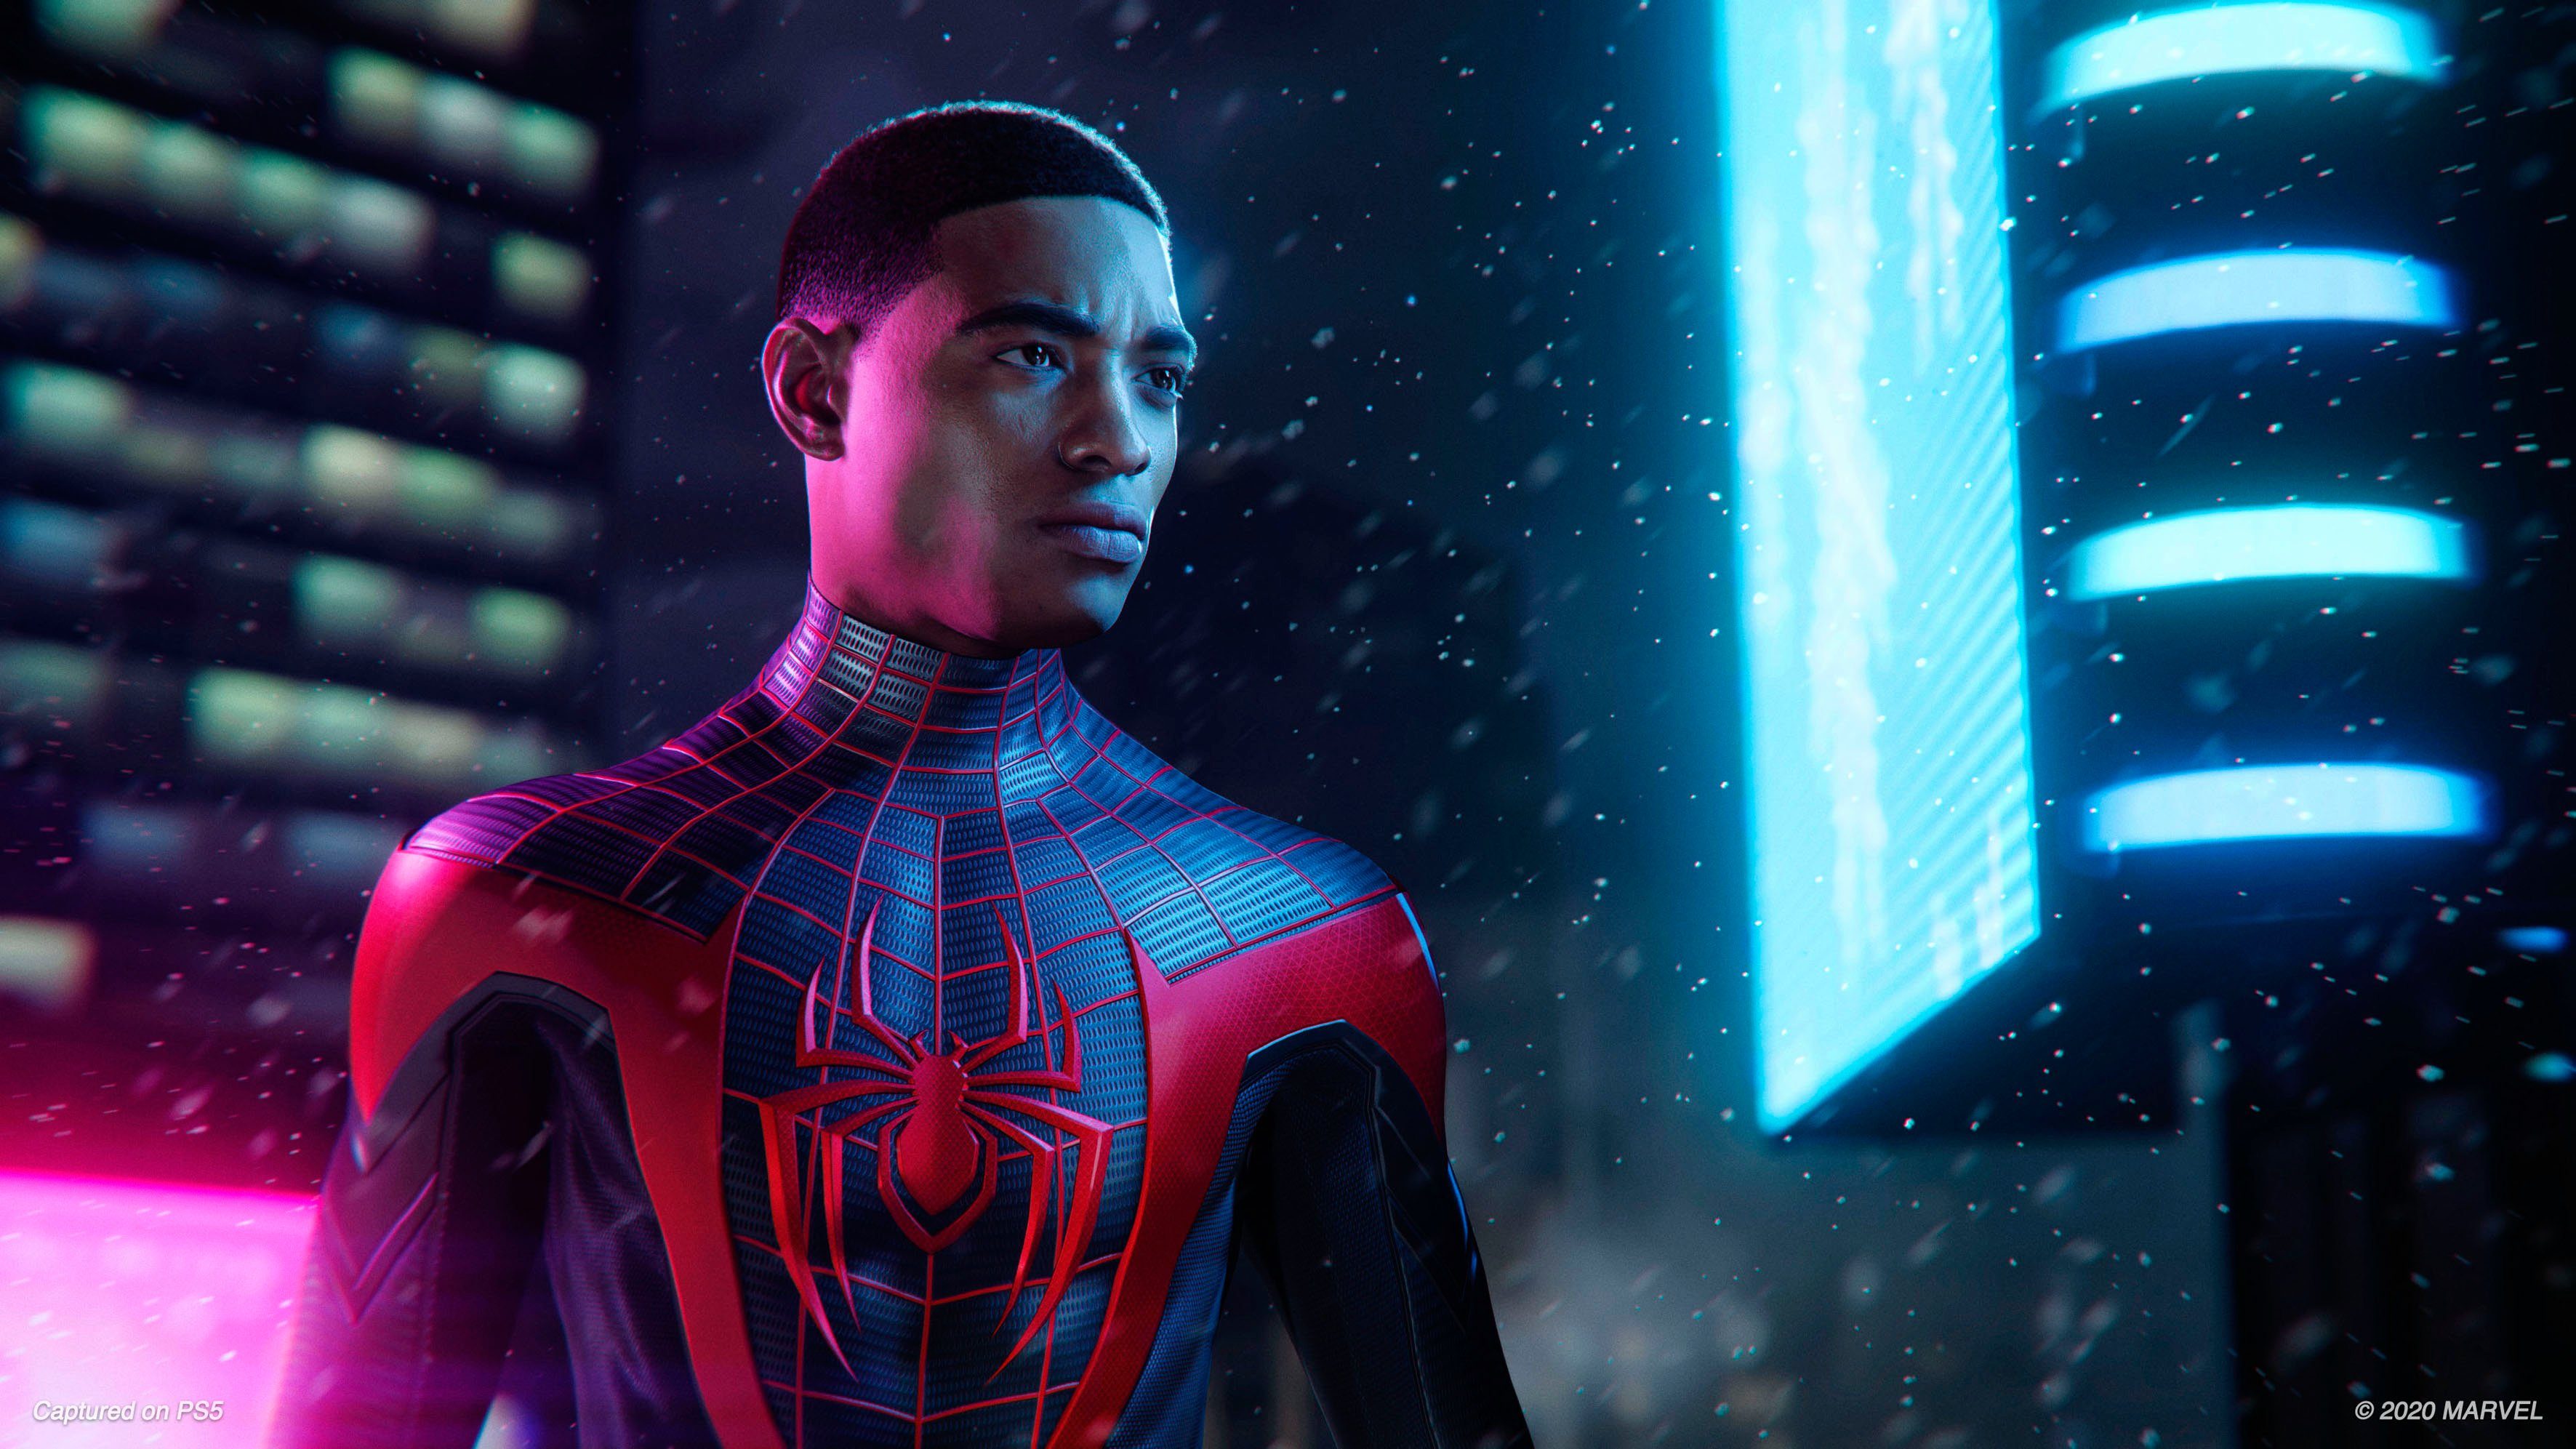 PlayStation 5 Miles Morales Marvel's Spider-Man: